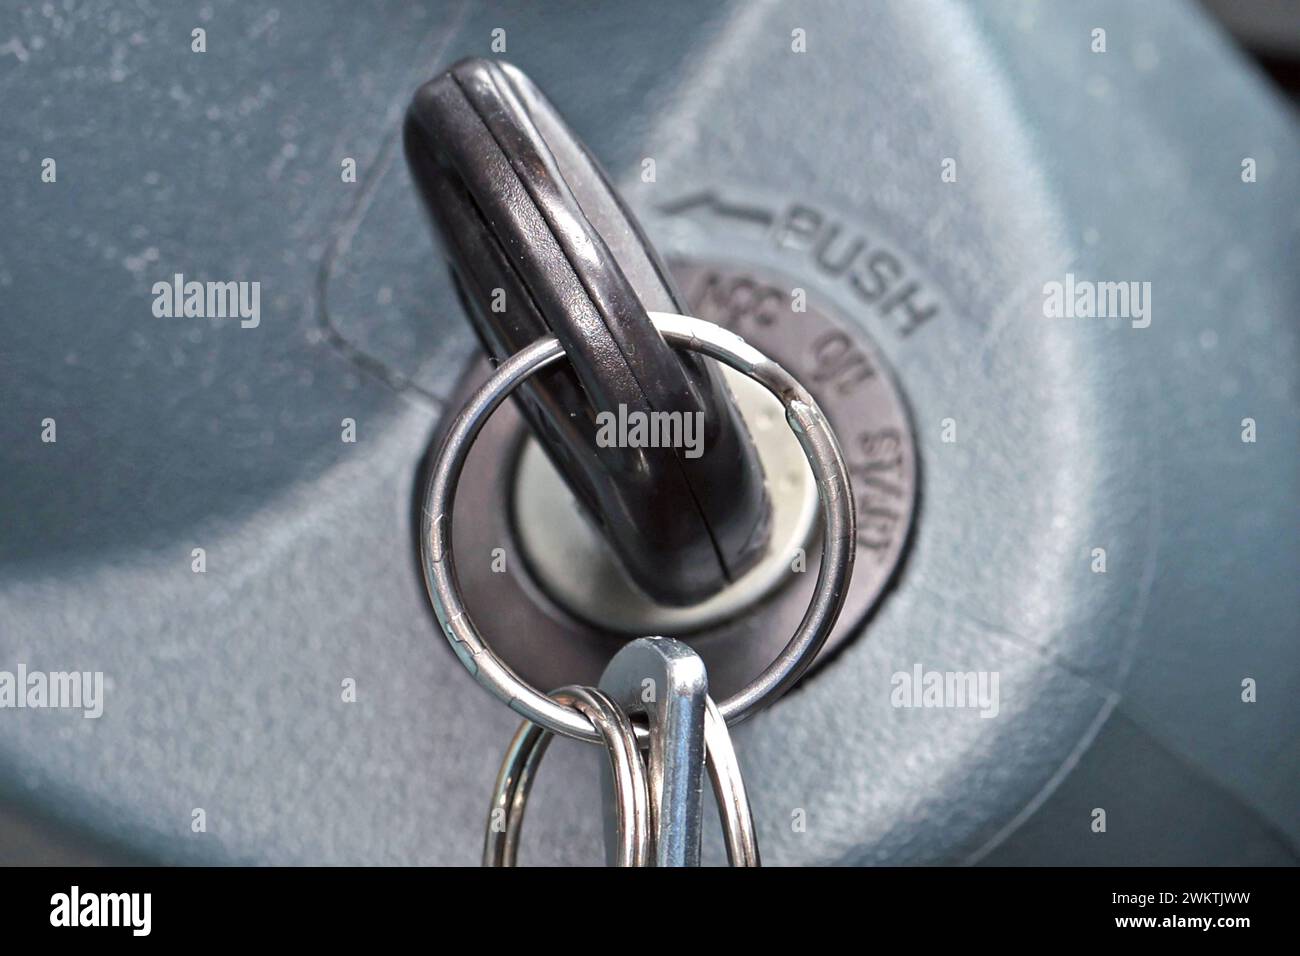 Zündschlüssel für Kraftfahrzeuge Ein Zündschlüssel befindet sich im Zündschloss von einem Auto *** chiave di accensione per veicoli a motore una chiave di accensione è situata nel dispositivo di accensione di un'auto Foto Stock